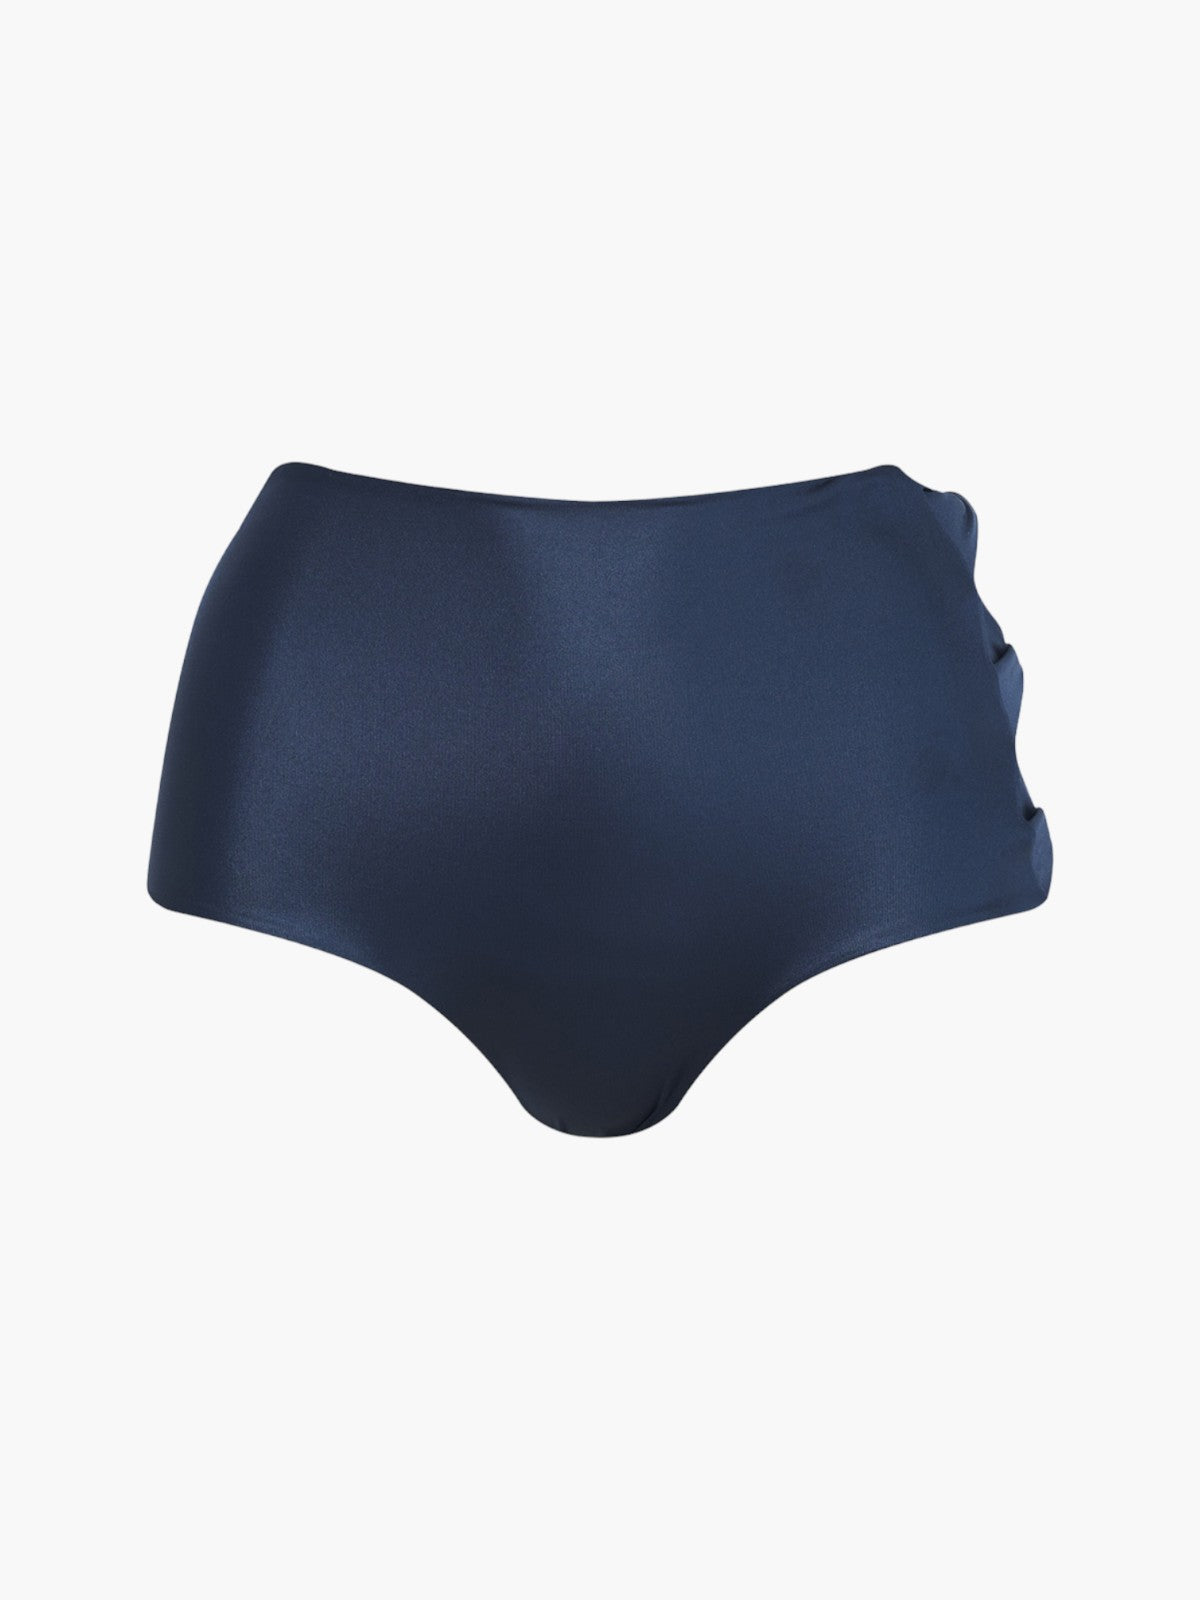 FRANCESCA – High waist bikini bottom in Navy blue